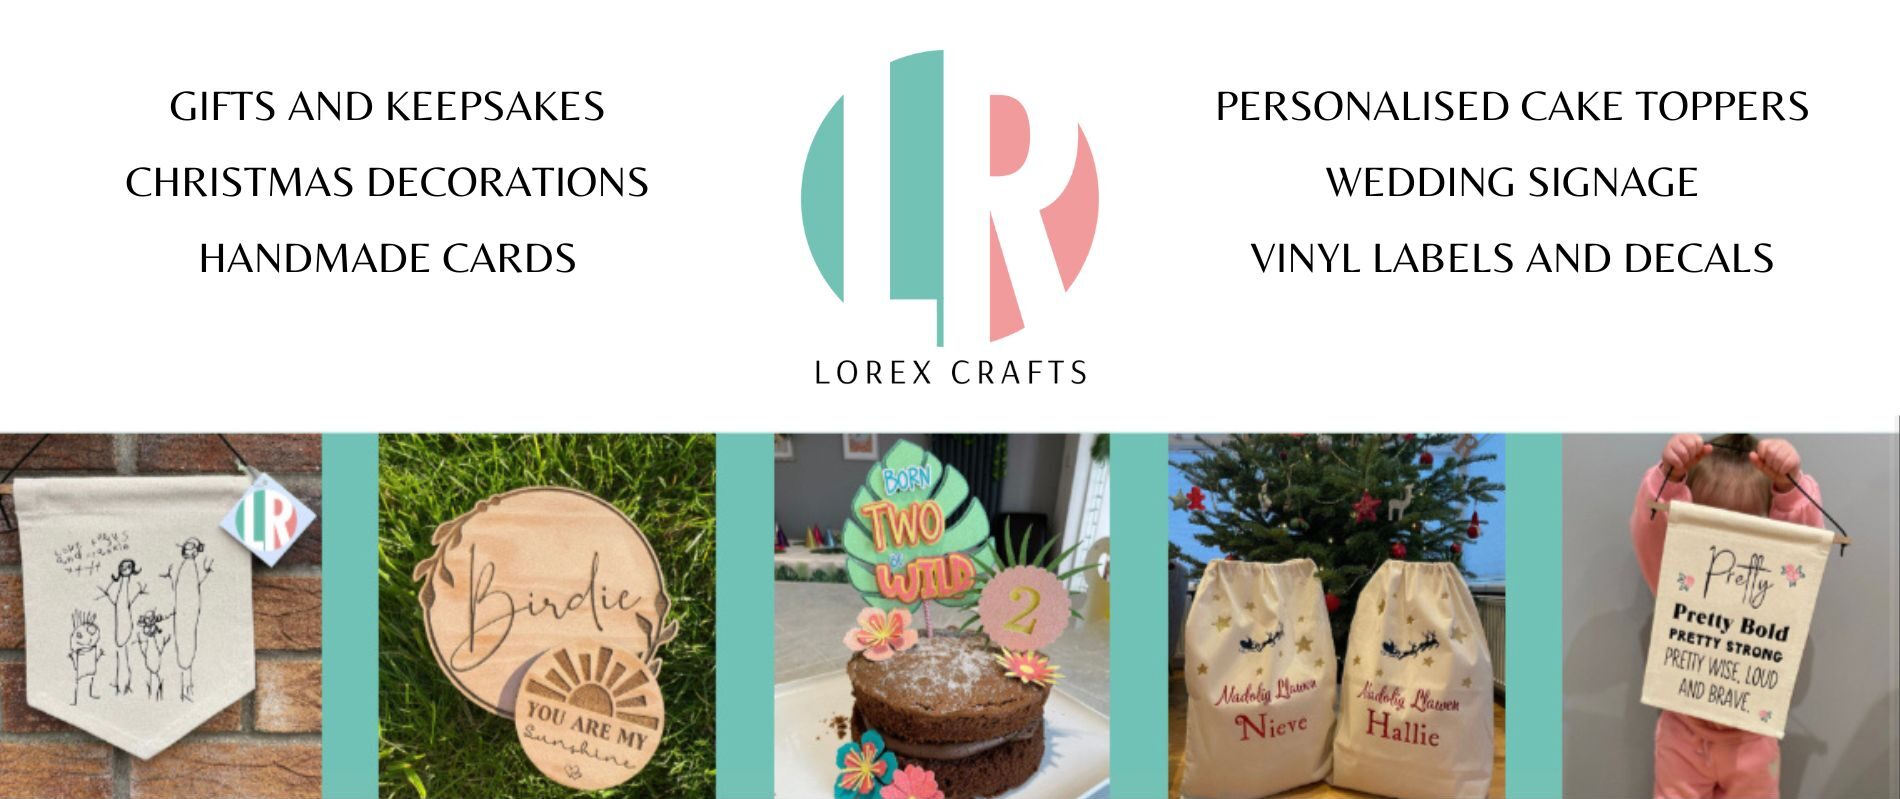 Lorex Crafts